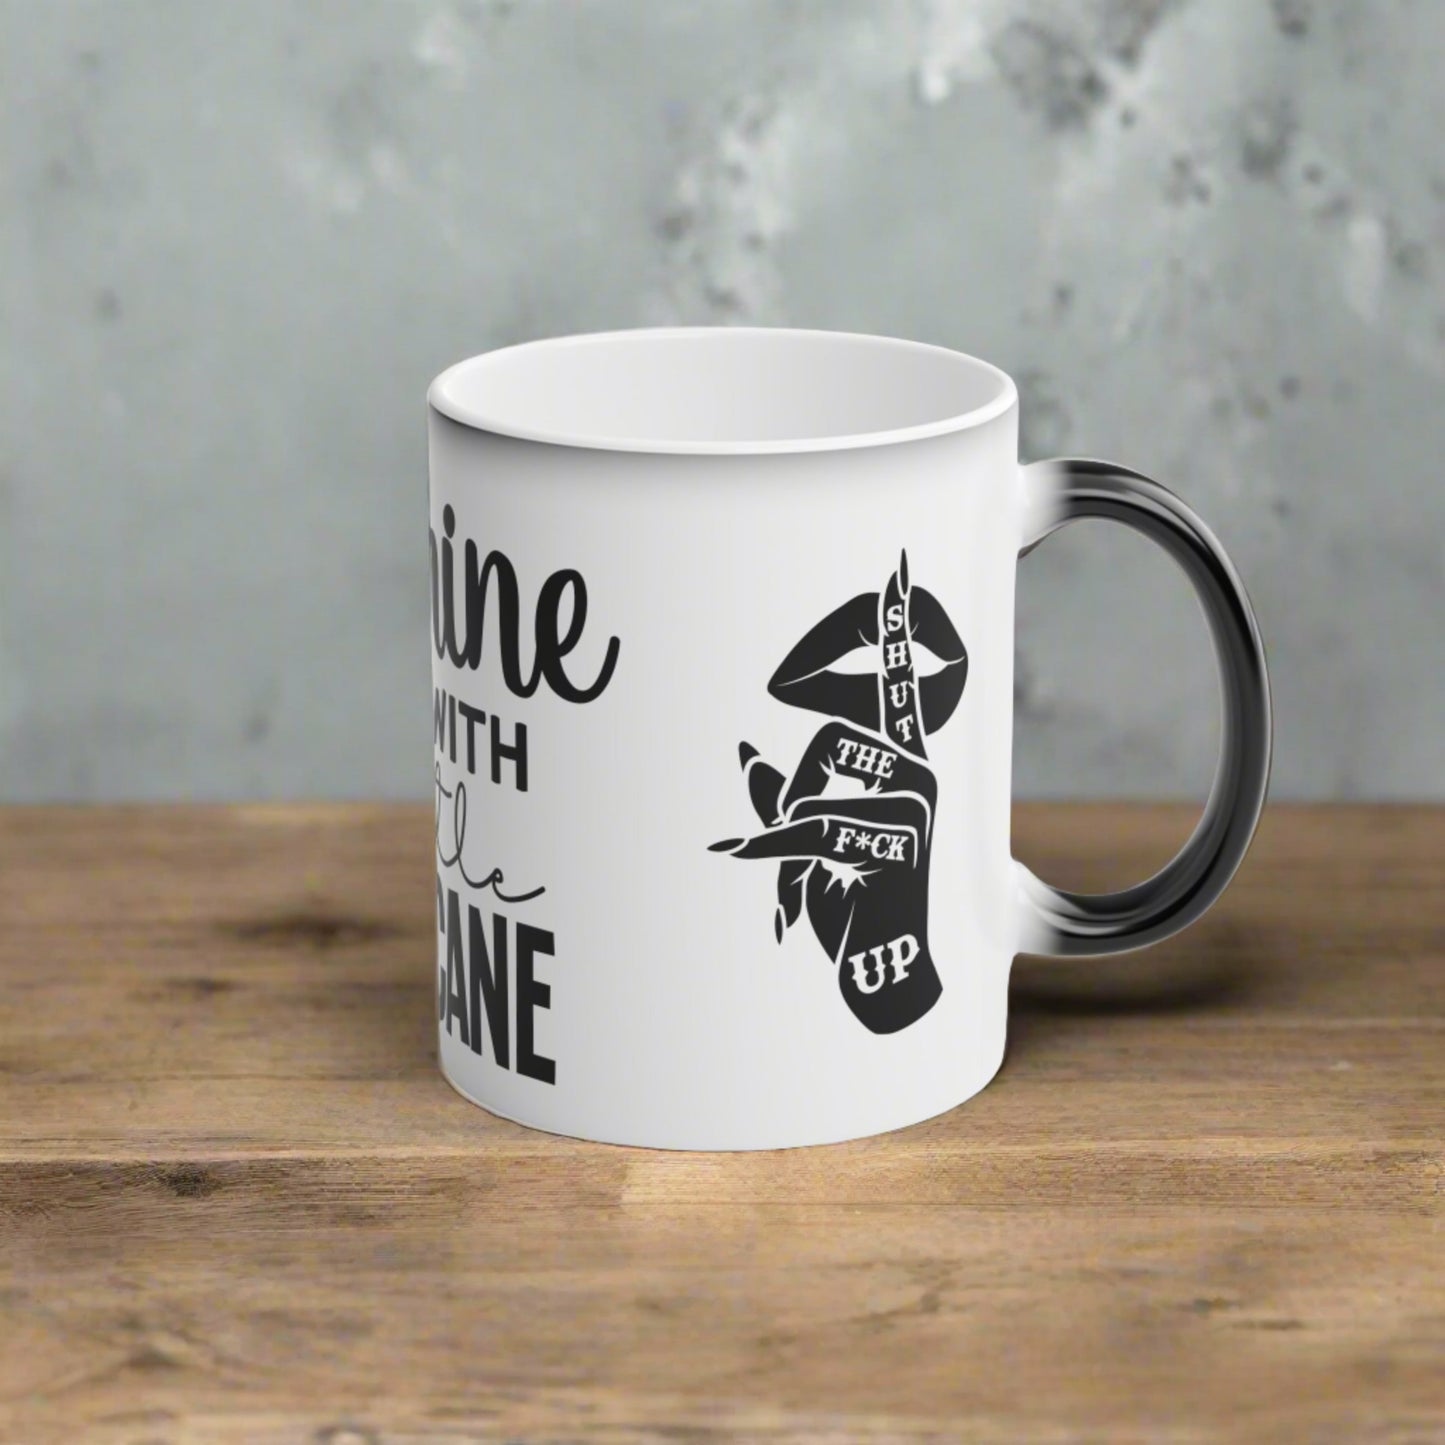 Magic Mug sunshine mixed with a little hurricane